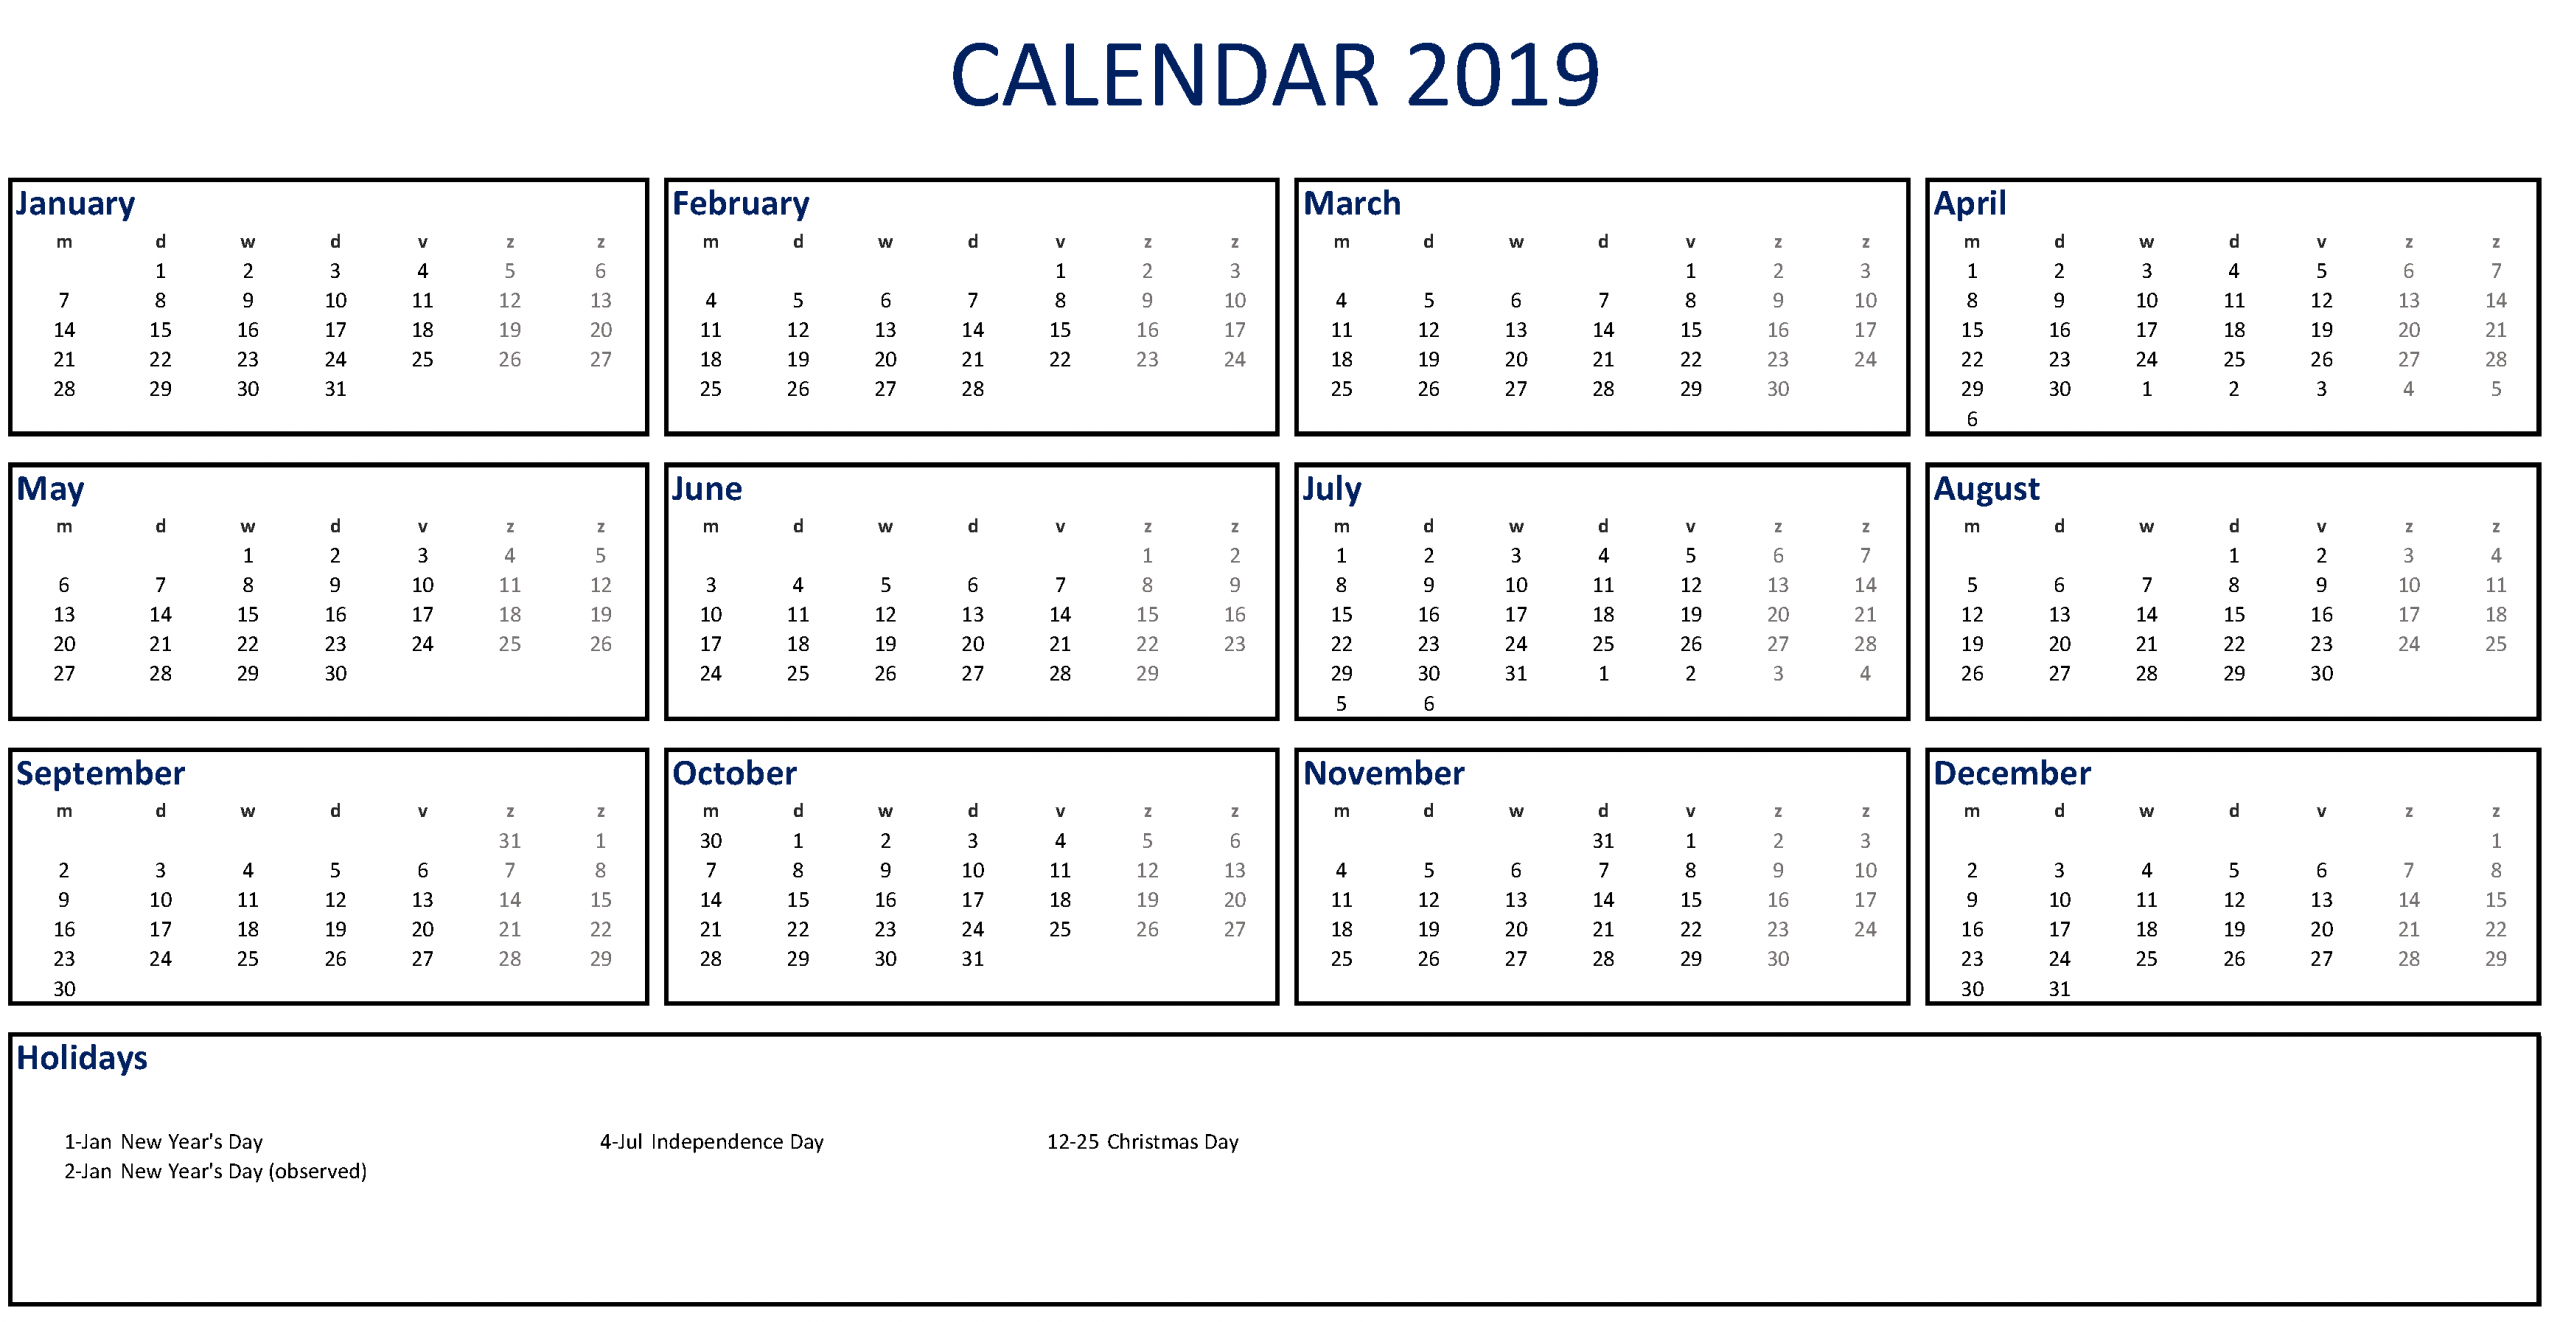 calendar 2019 template templates at allbusinesstemplates